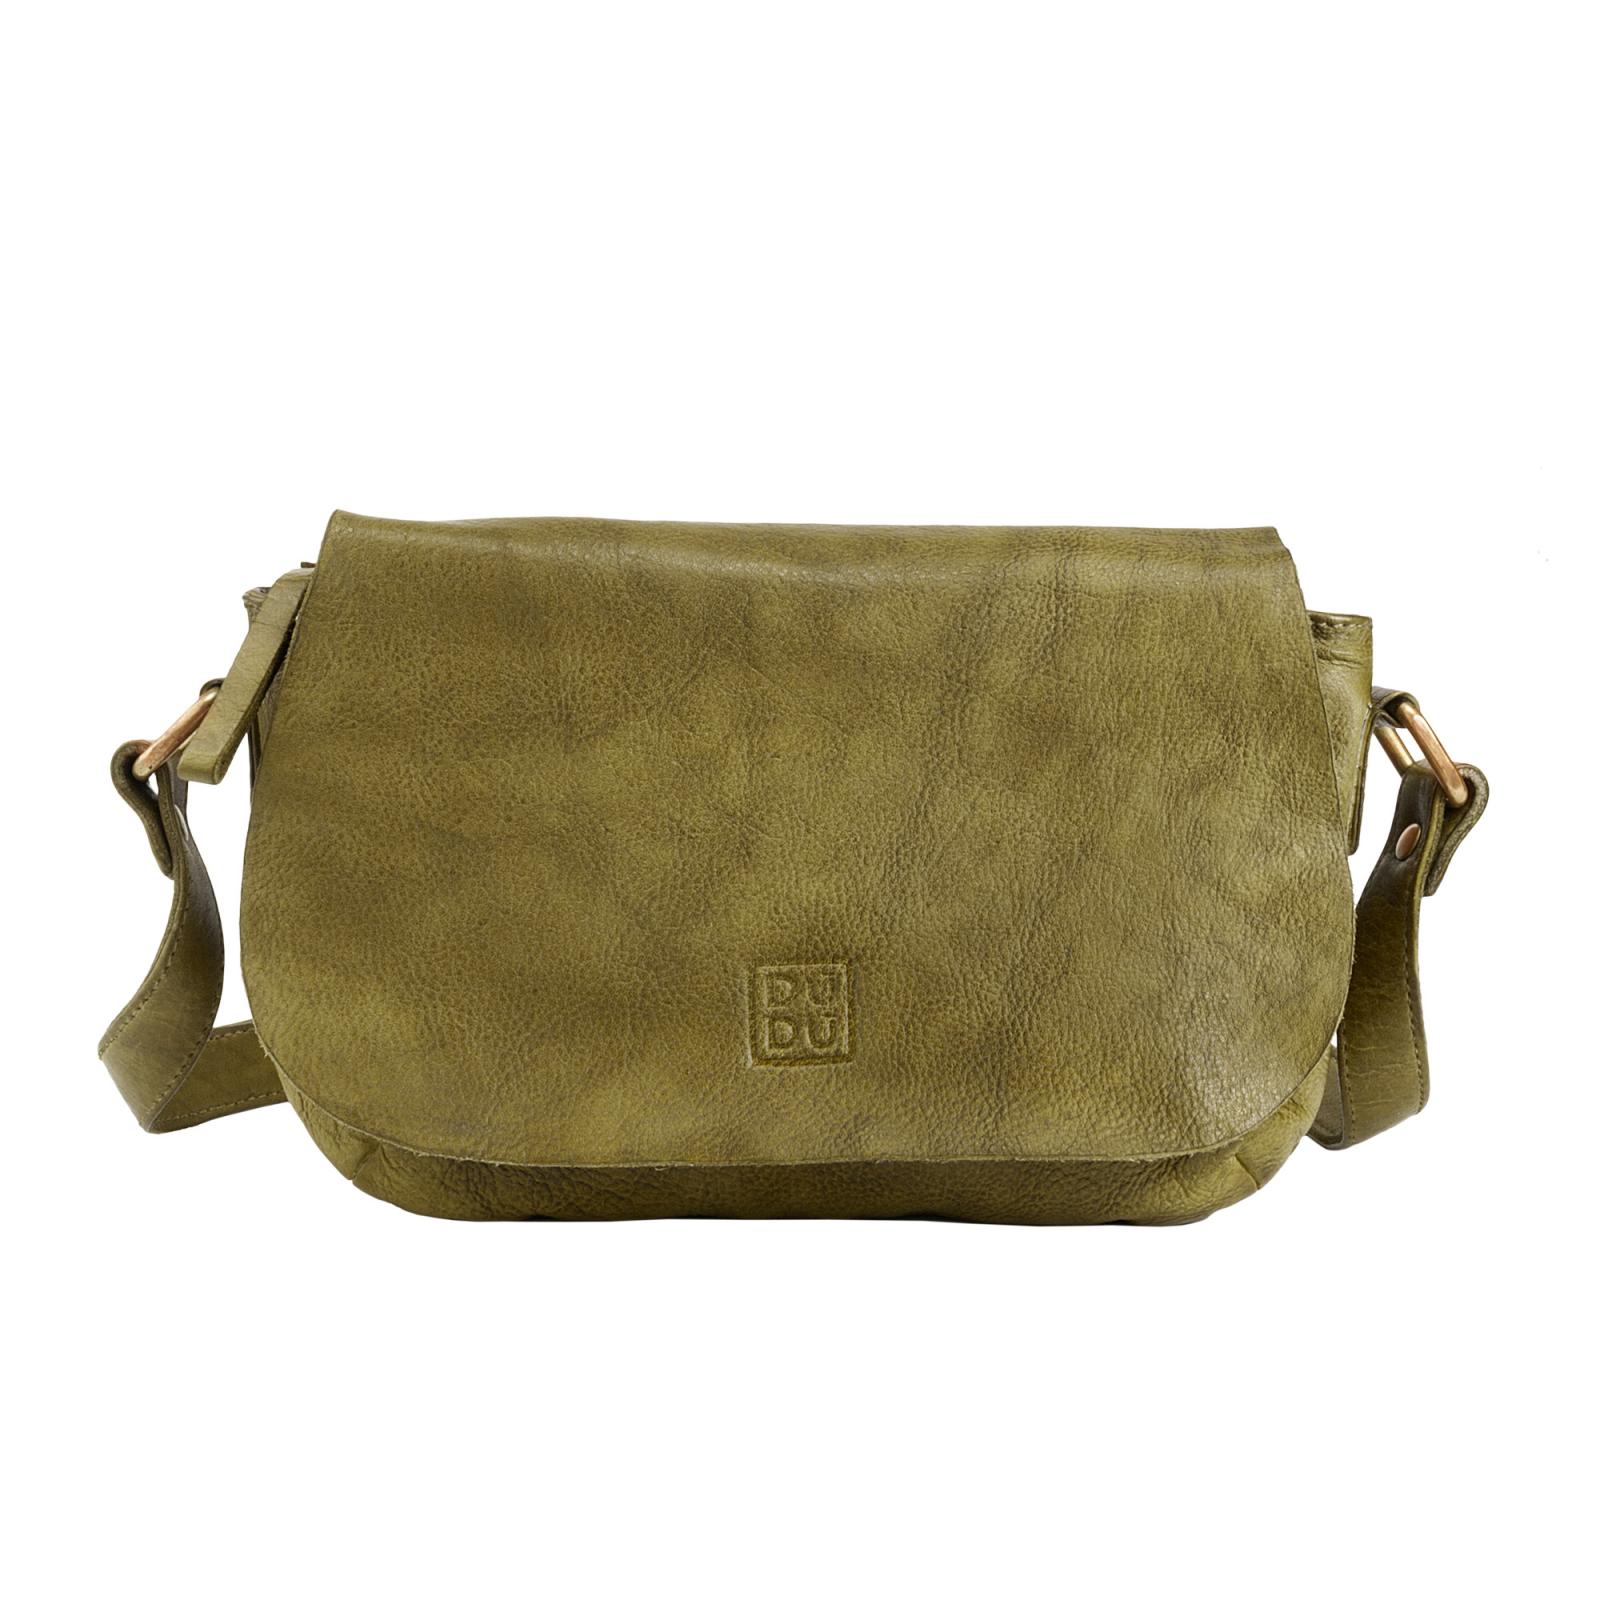 Borse  Donna  Timeless - Mini Bag  - Pistachio Green